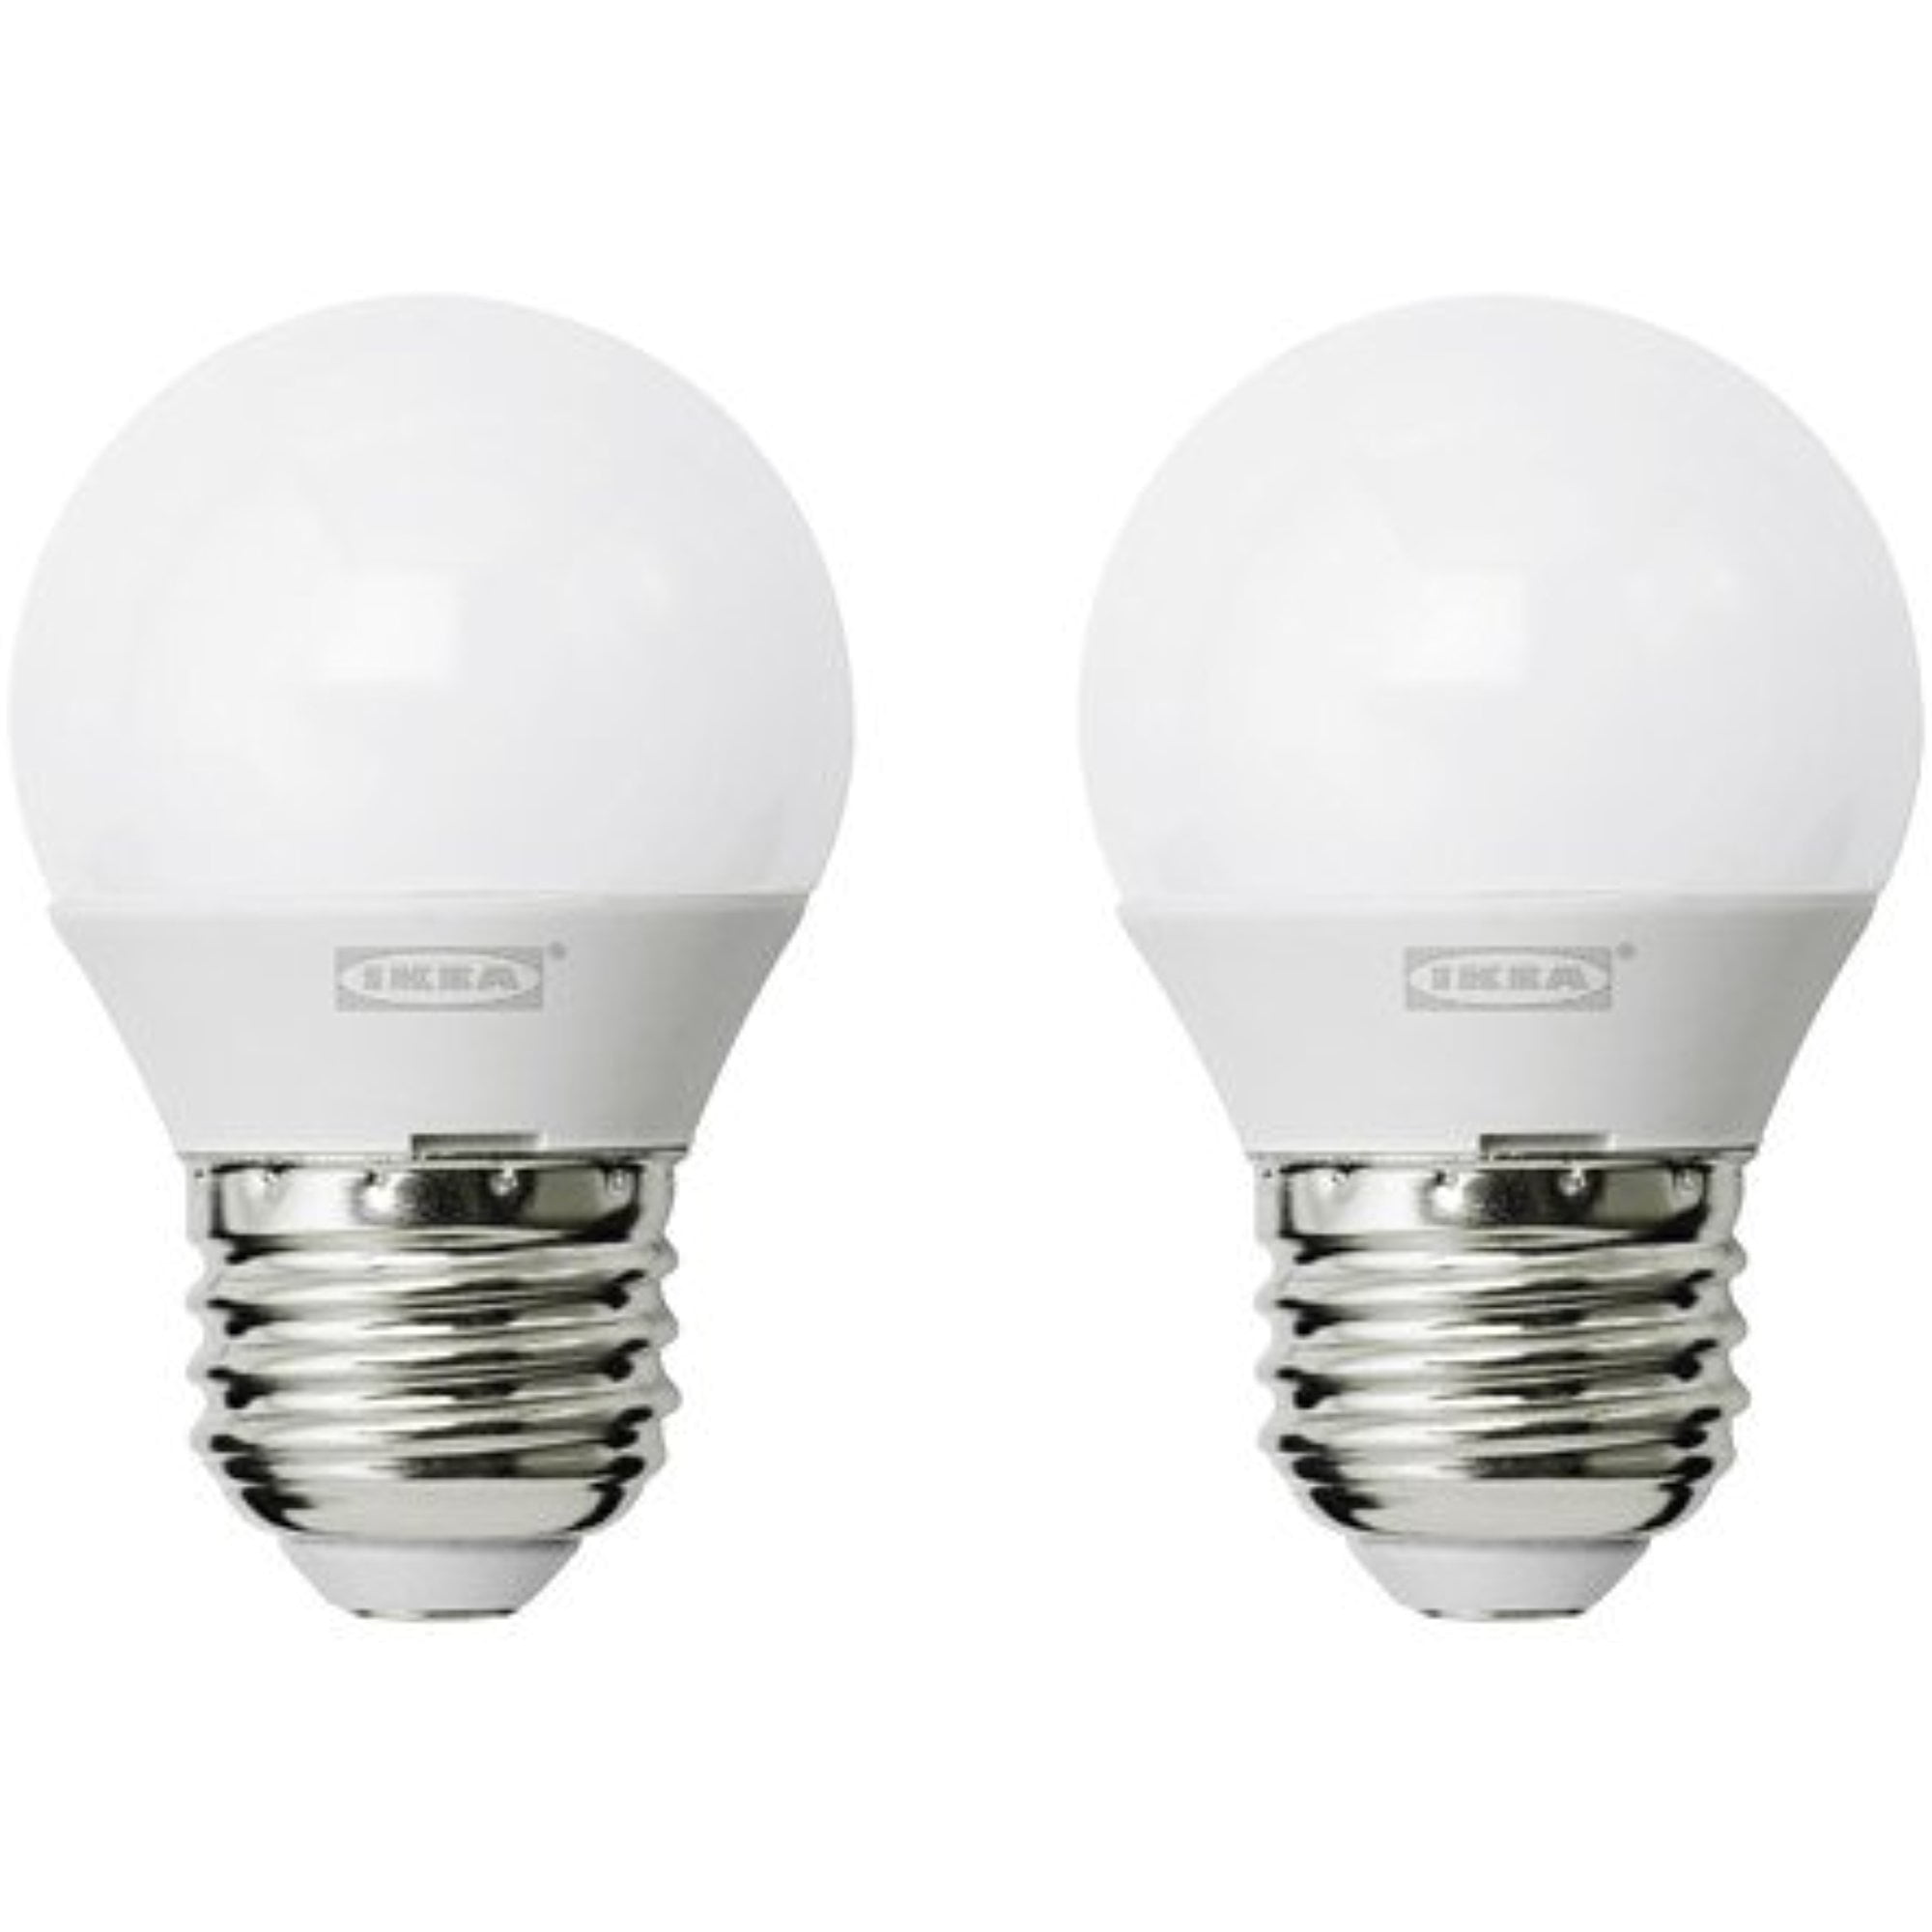 rots Publicatie delicaat Ikea 8 packs LED bulb E26 200 lumen, globe opal 1628.82017.306 - Walmart.com